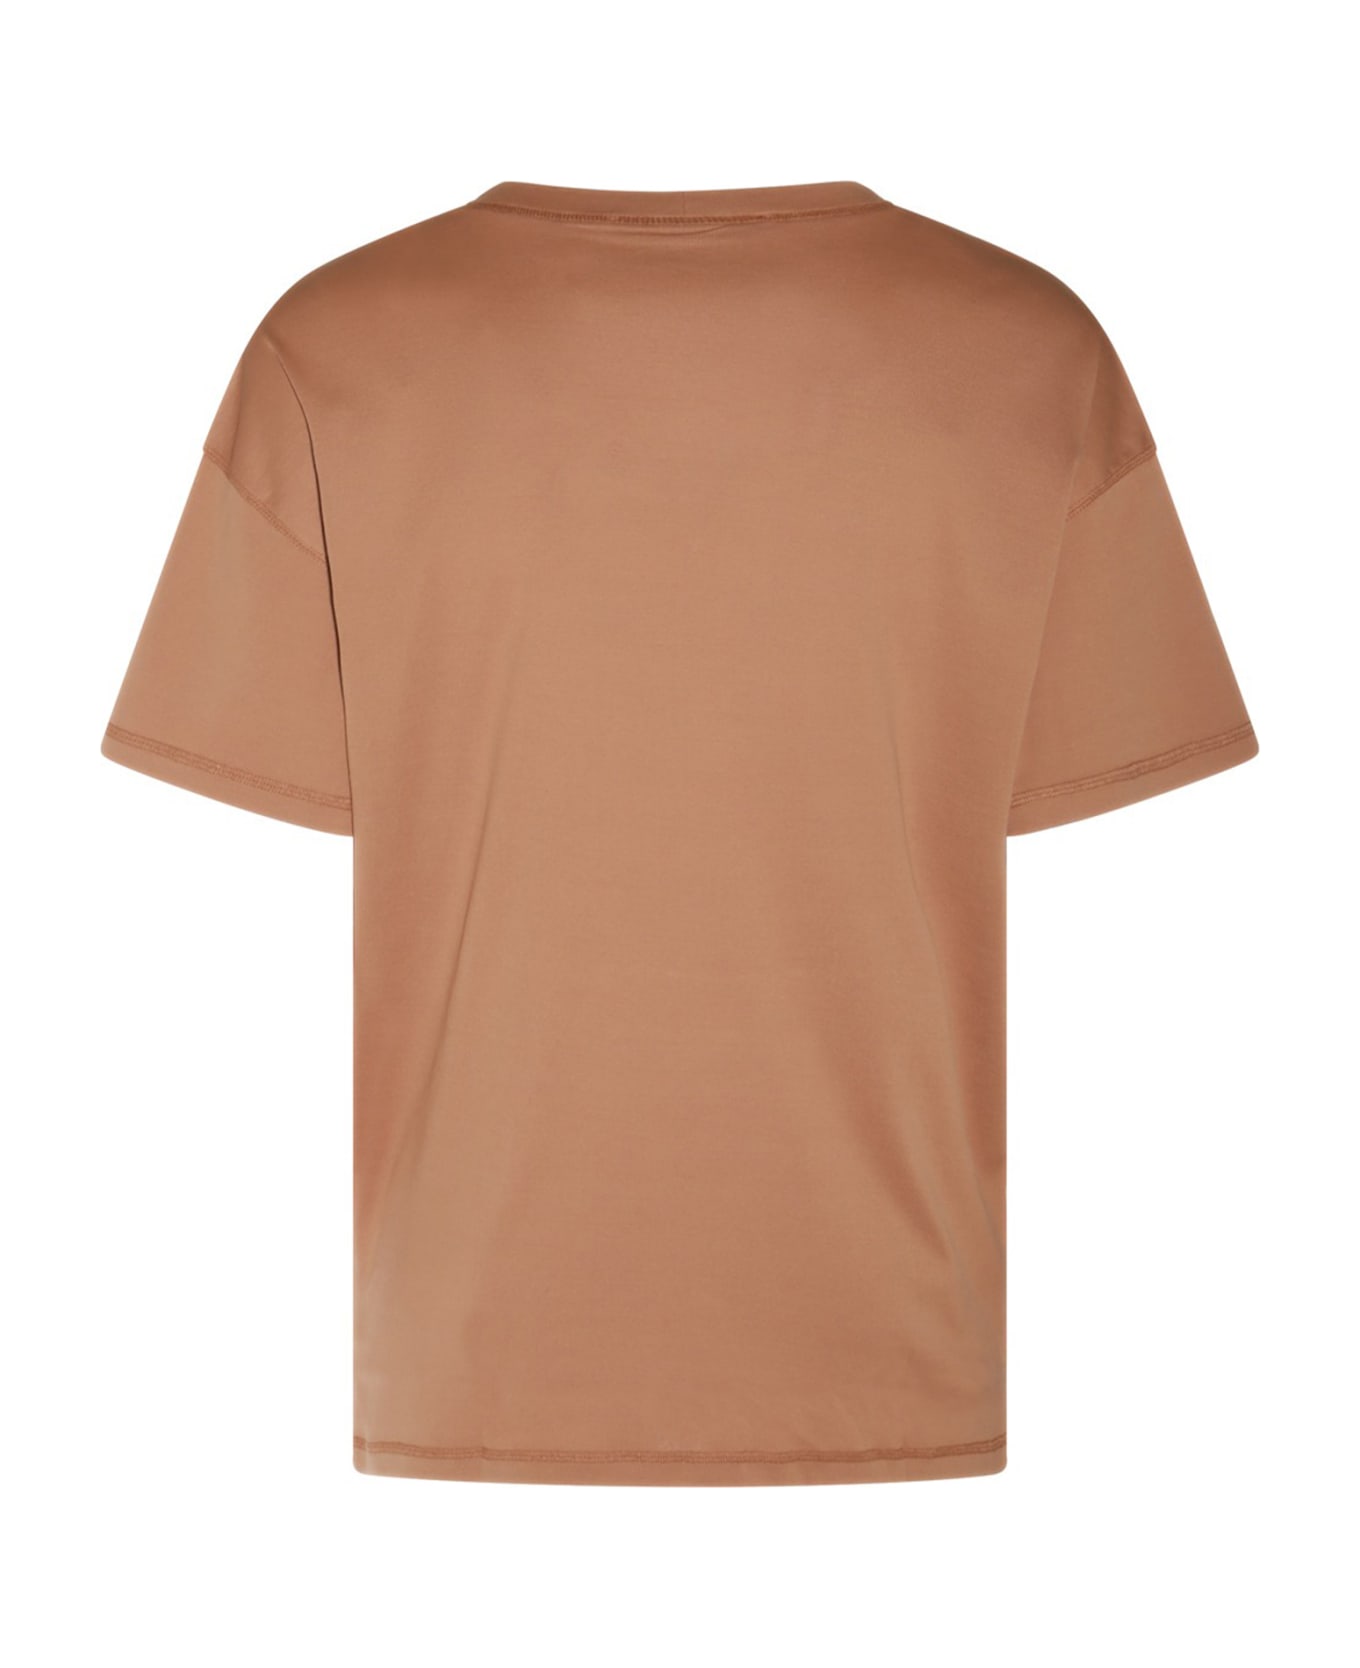 Lemaire T-Shirt - SAND